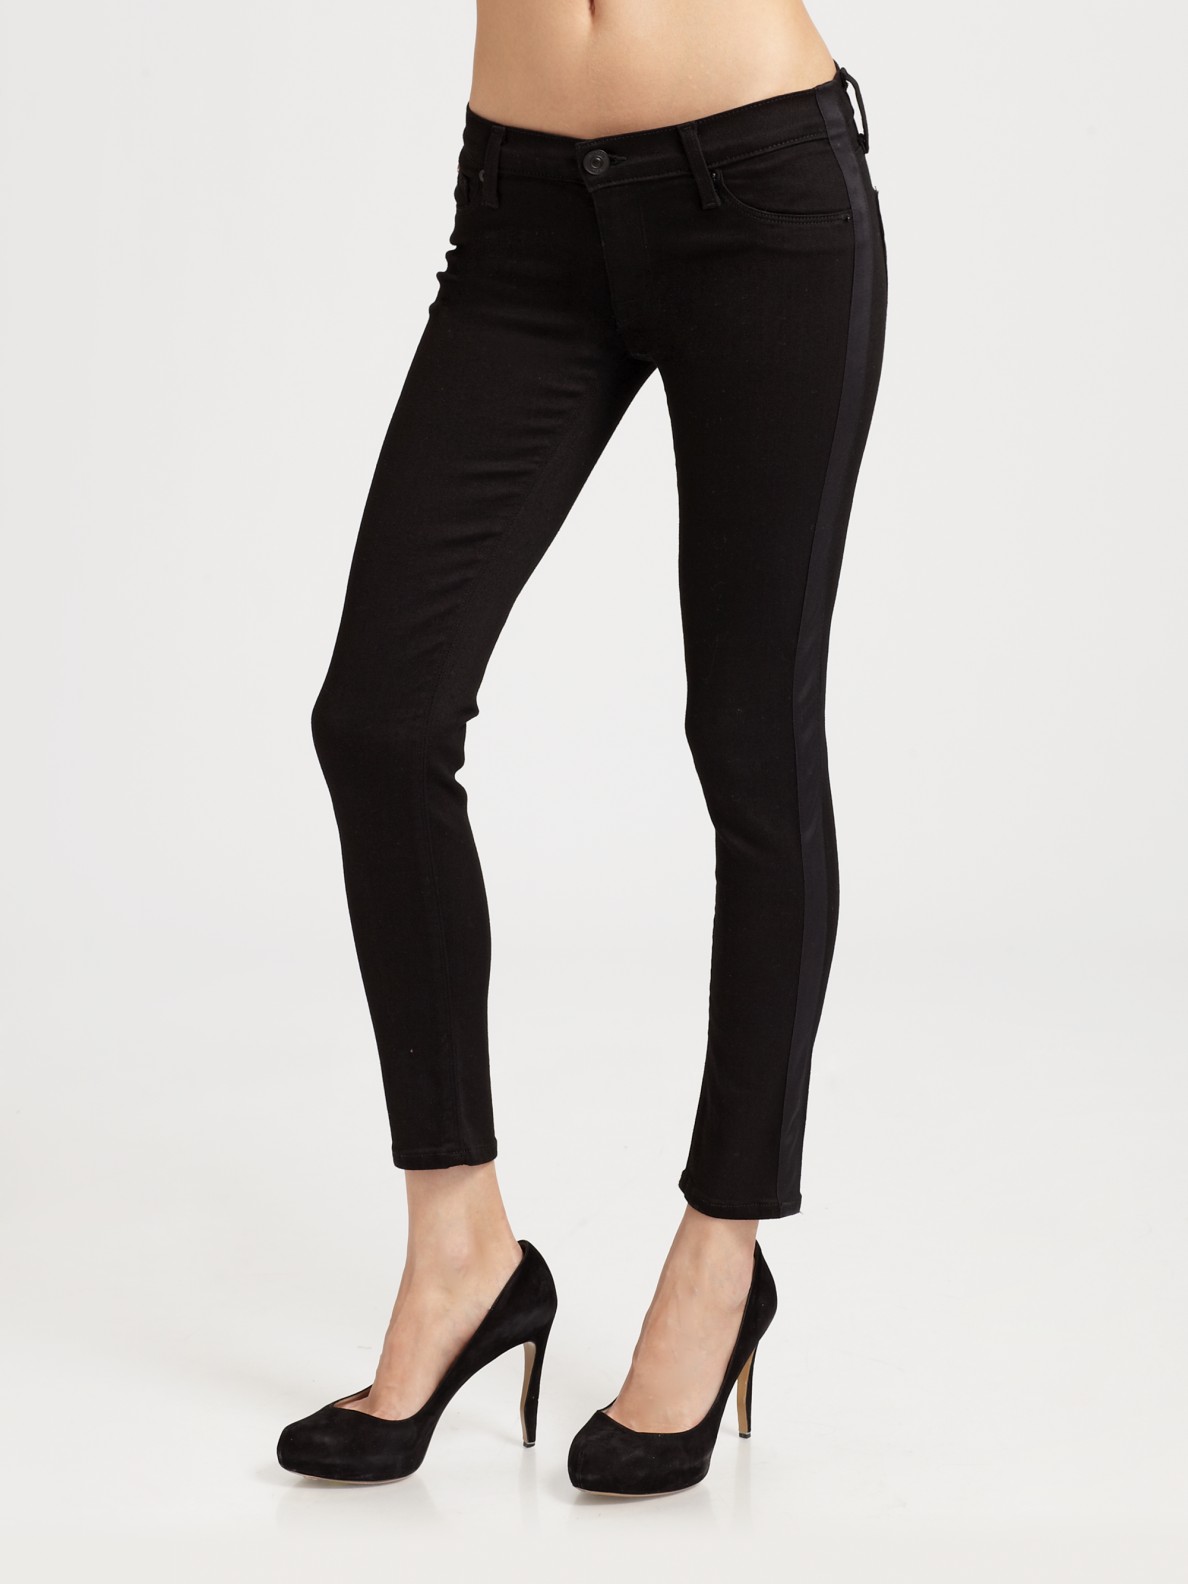 Lyst - Hudson Jeans Cropped Skinny Jeans in Black